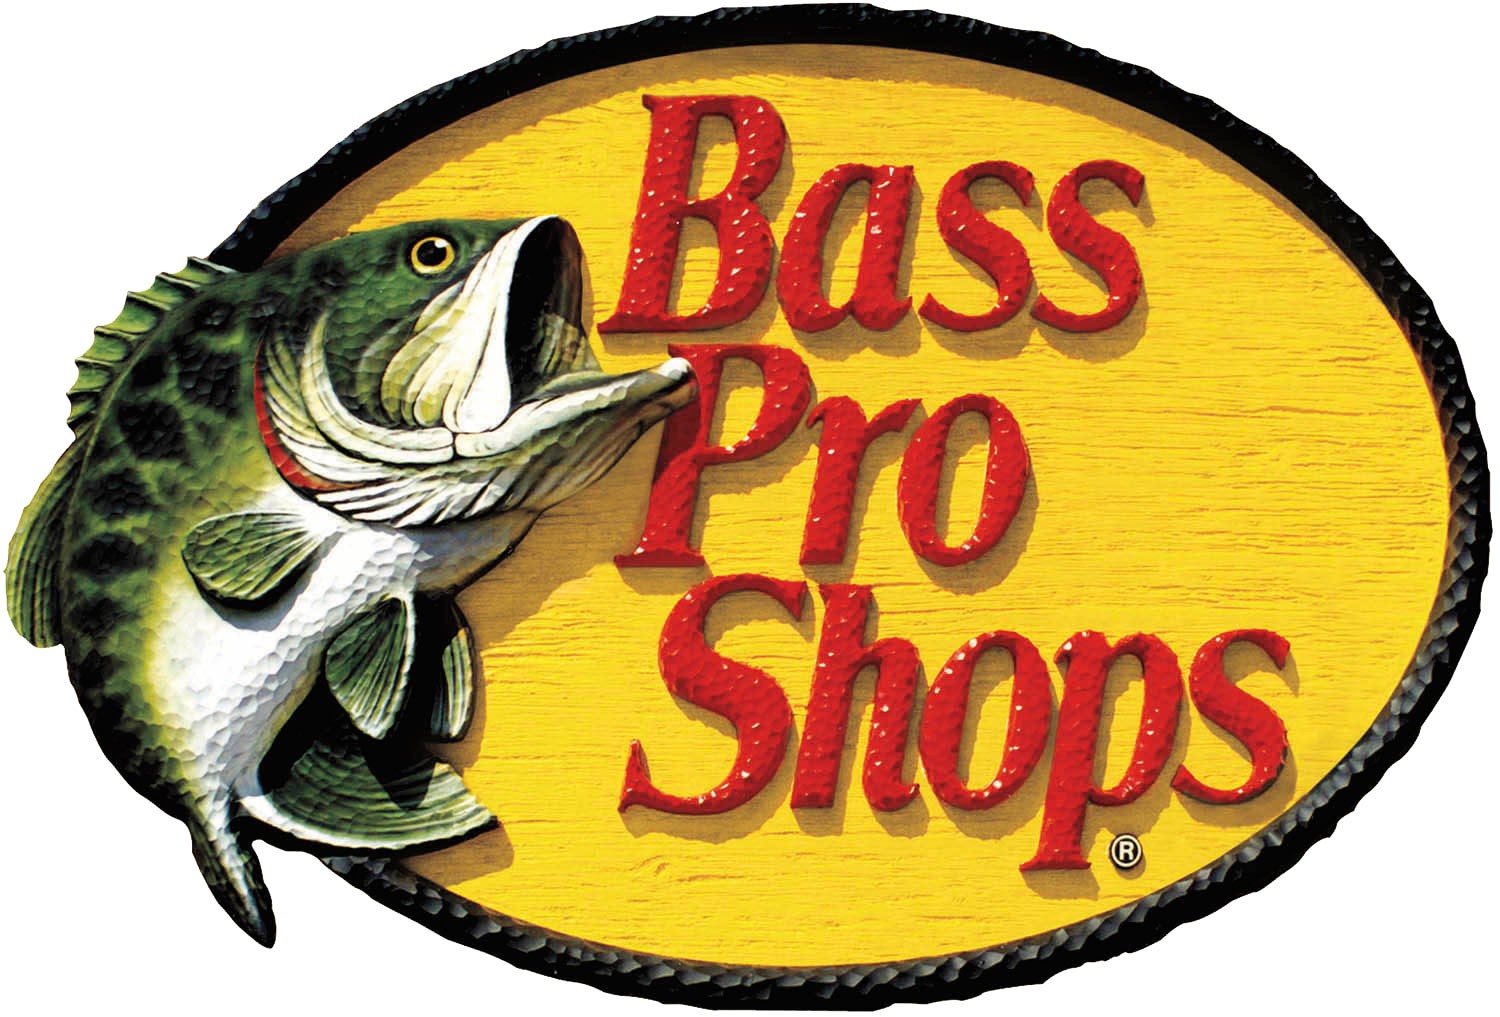 Bass Pro Shops Promo Code Reddit